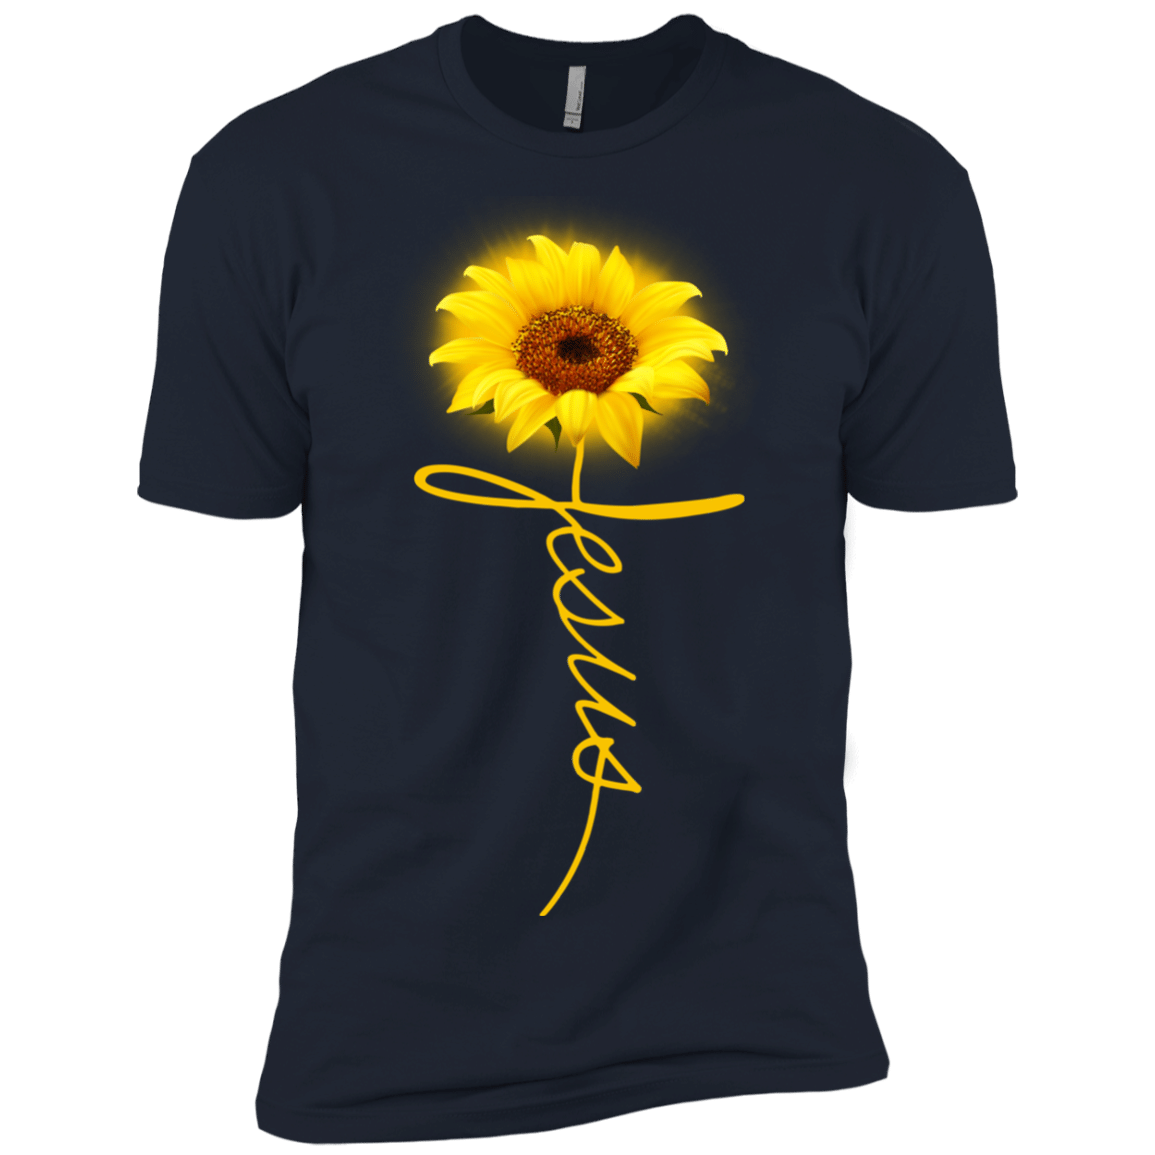 Sunflower Jesus shirt - Gearnoble